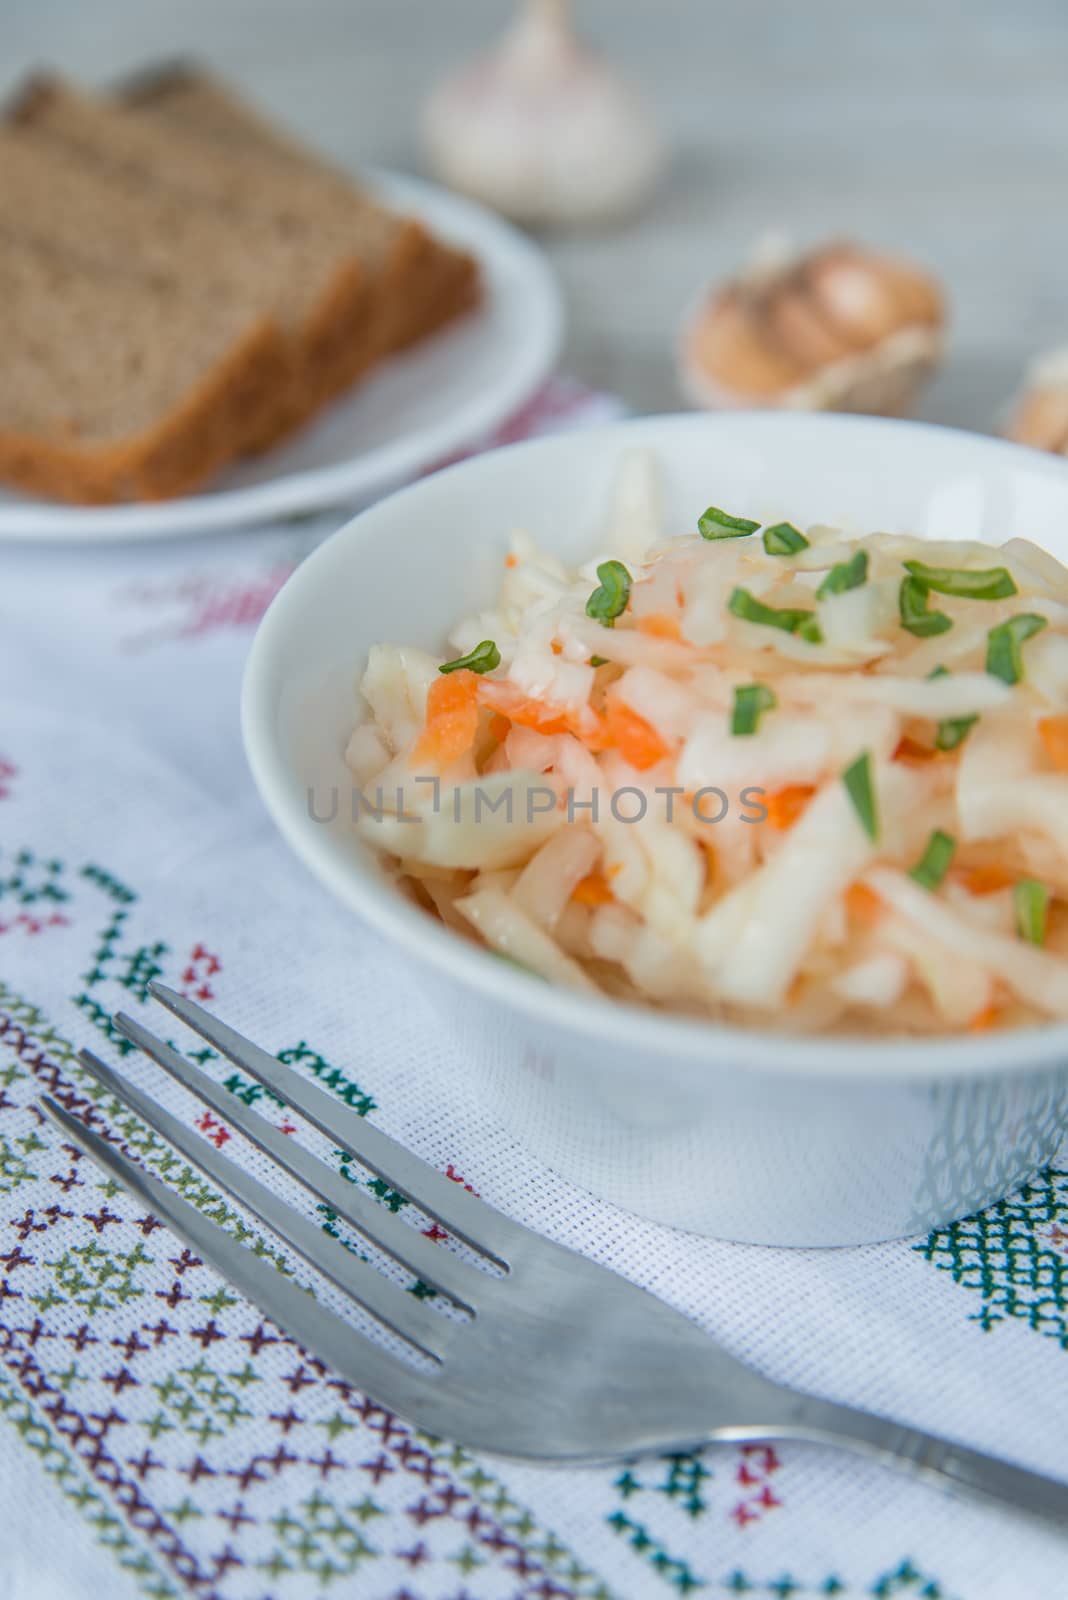 Plate of the sauerkraut  by Linaga